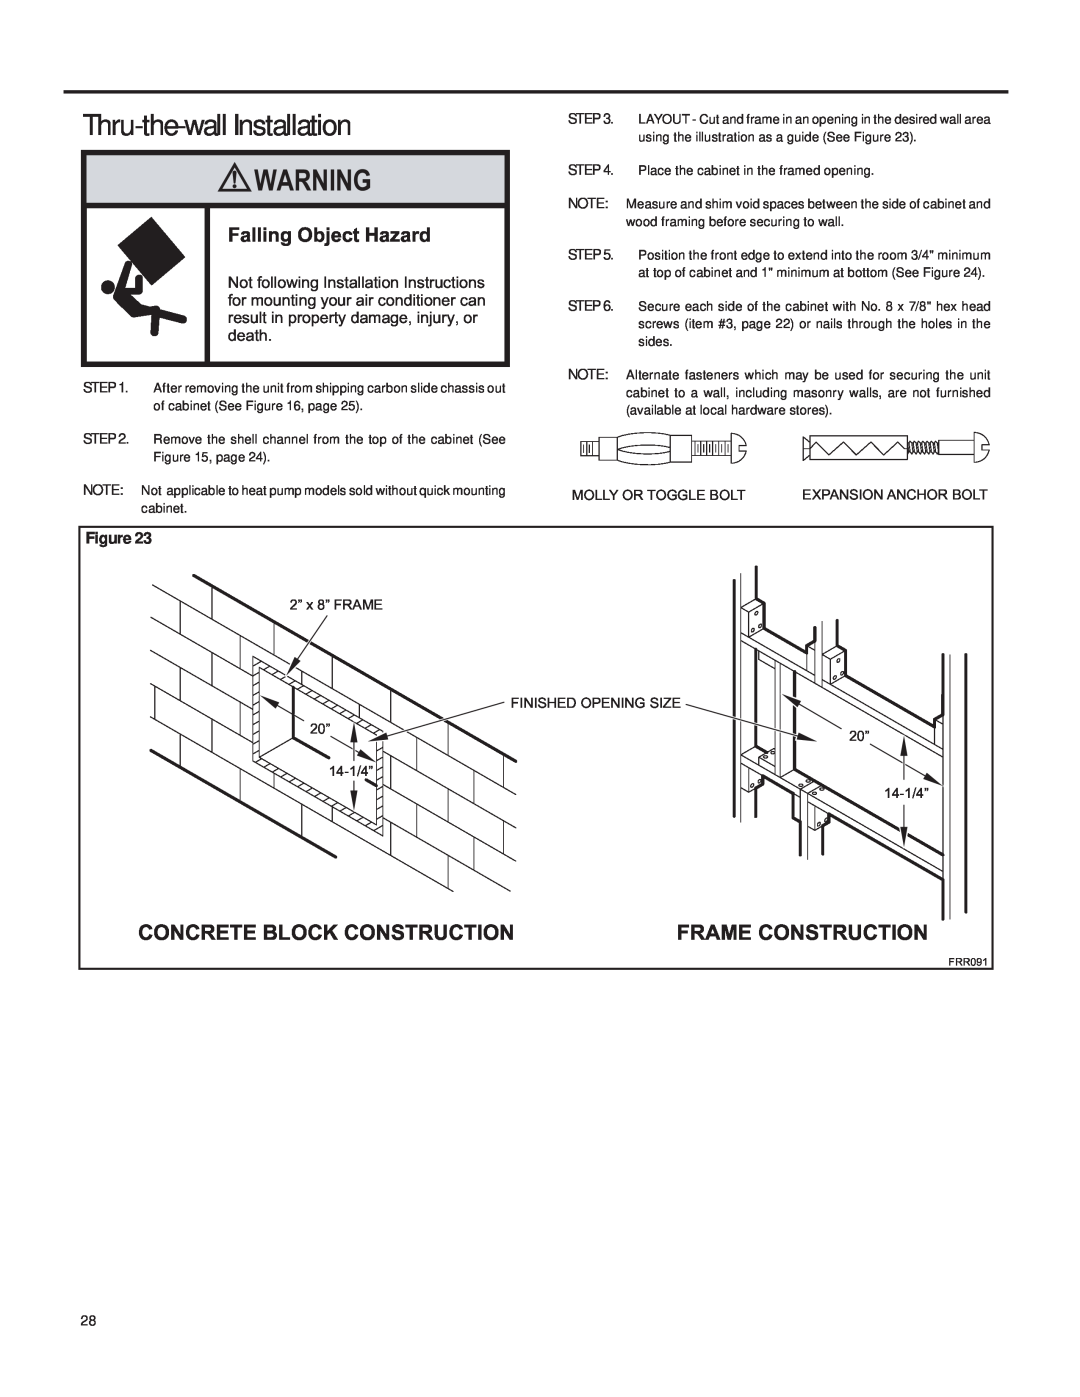 Friedrich SQ10 Thru-the-wallInstallation, Concrete Block Construction, Falling Object Hazard, Frame Construction, Figure 